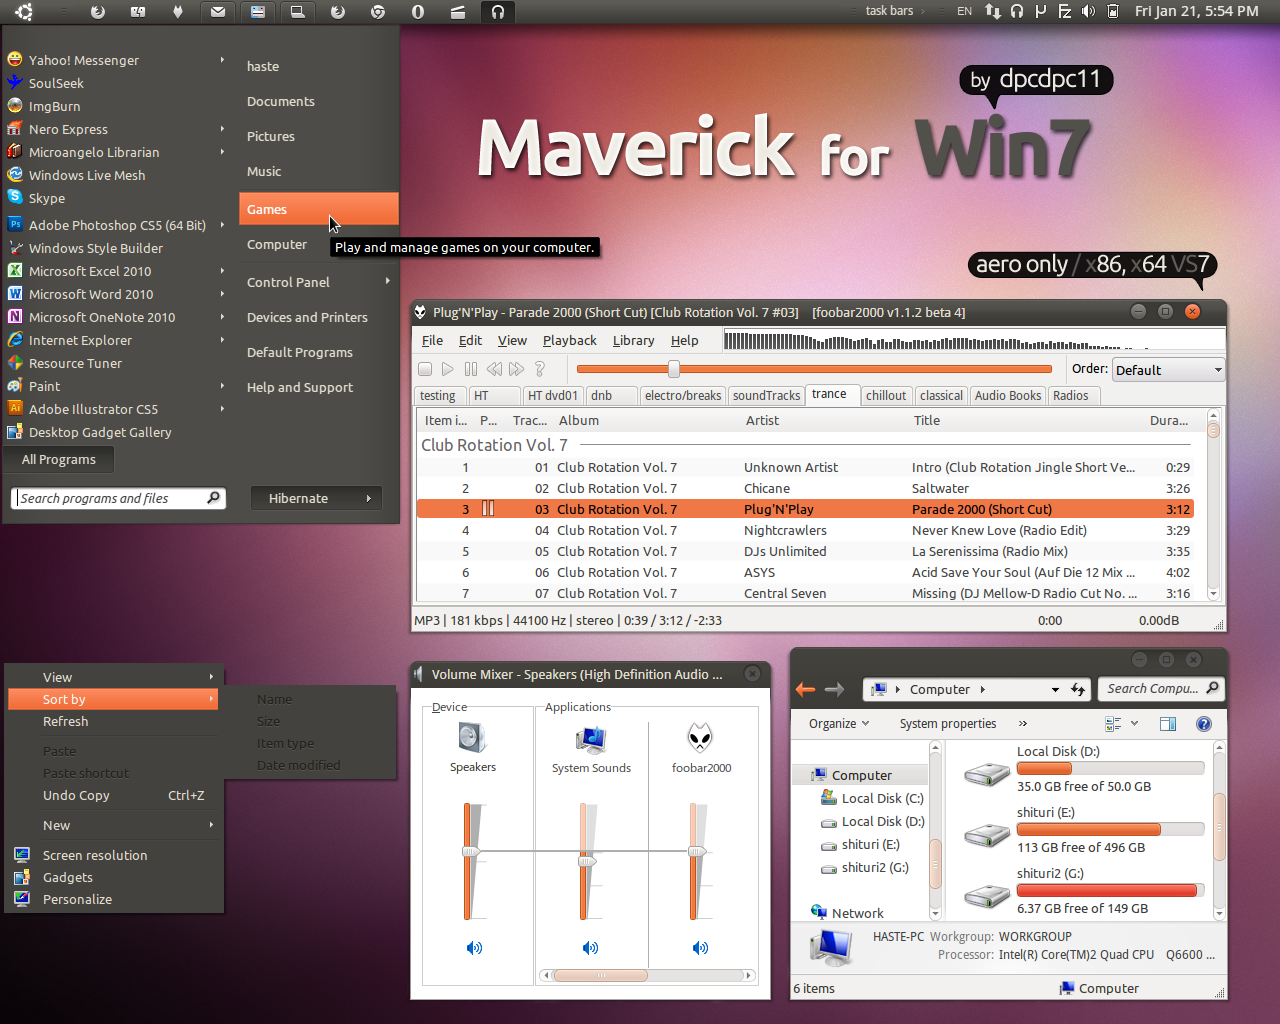 Make Windows 7 Look Like Ubuntu With Maverick For Win7 Web Upd8 Ubuntu Linux Blog